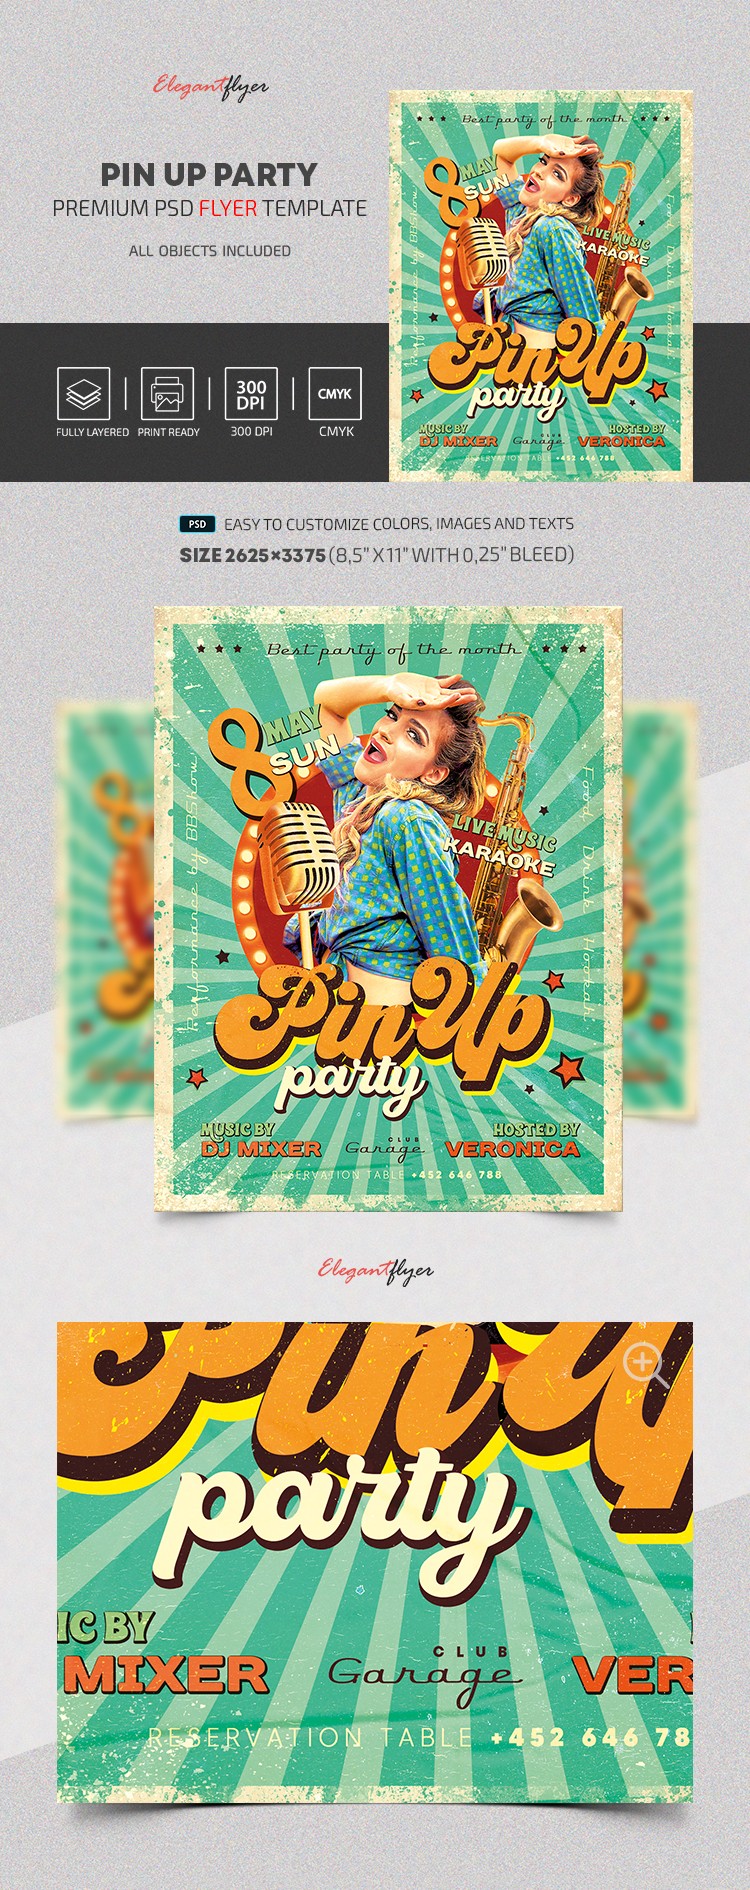 Pin Up Party Flyer by ElegantFlyer